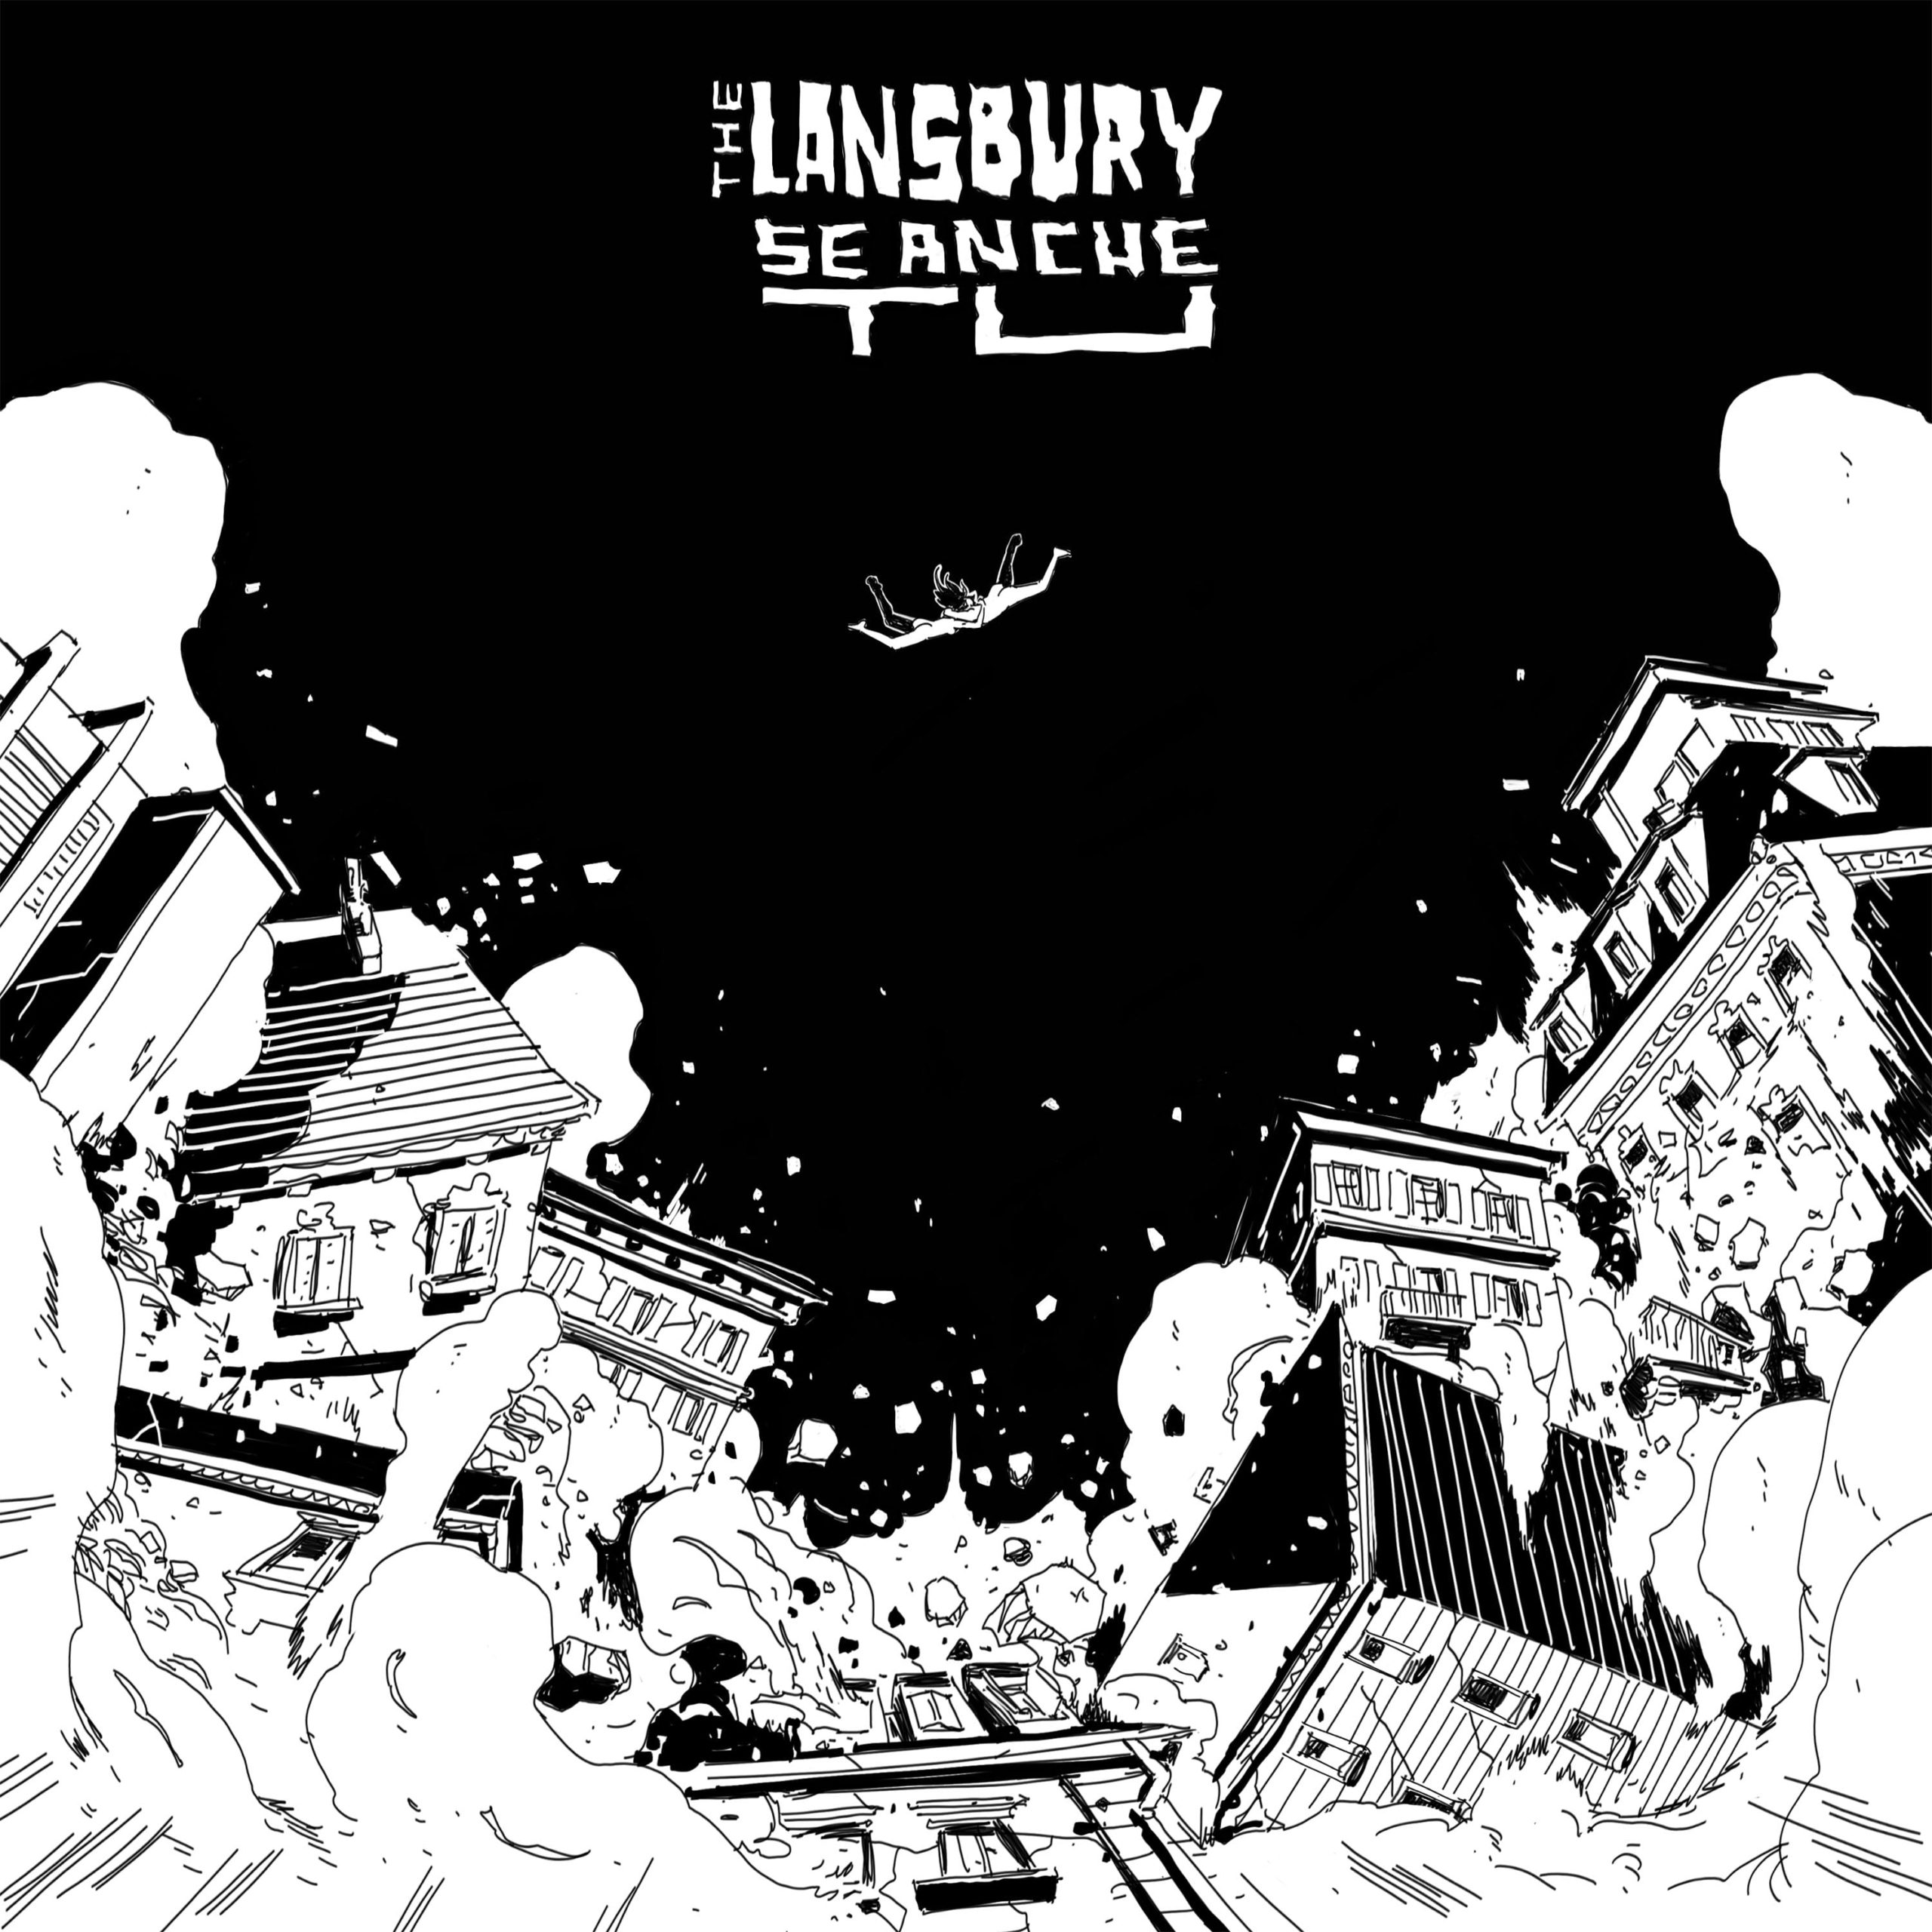 The Lansbury